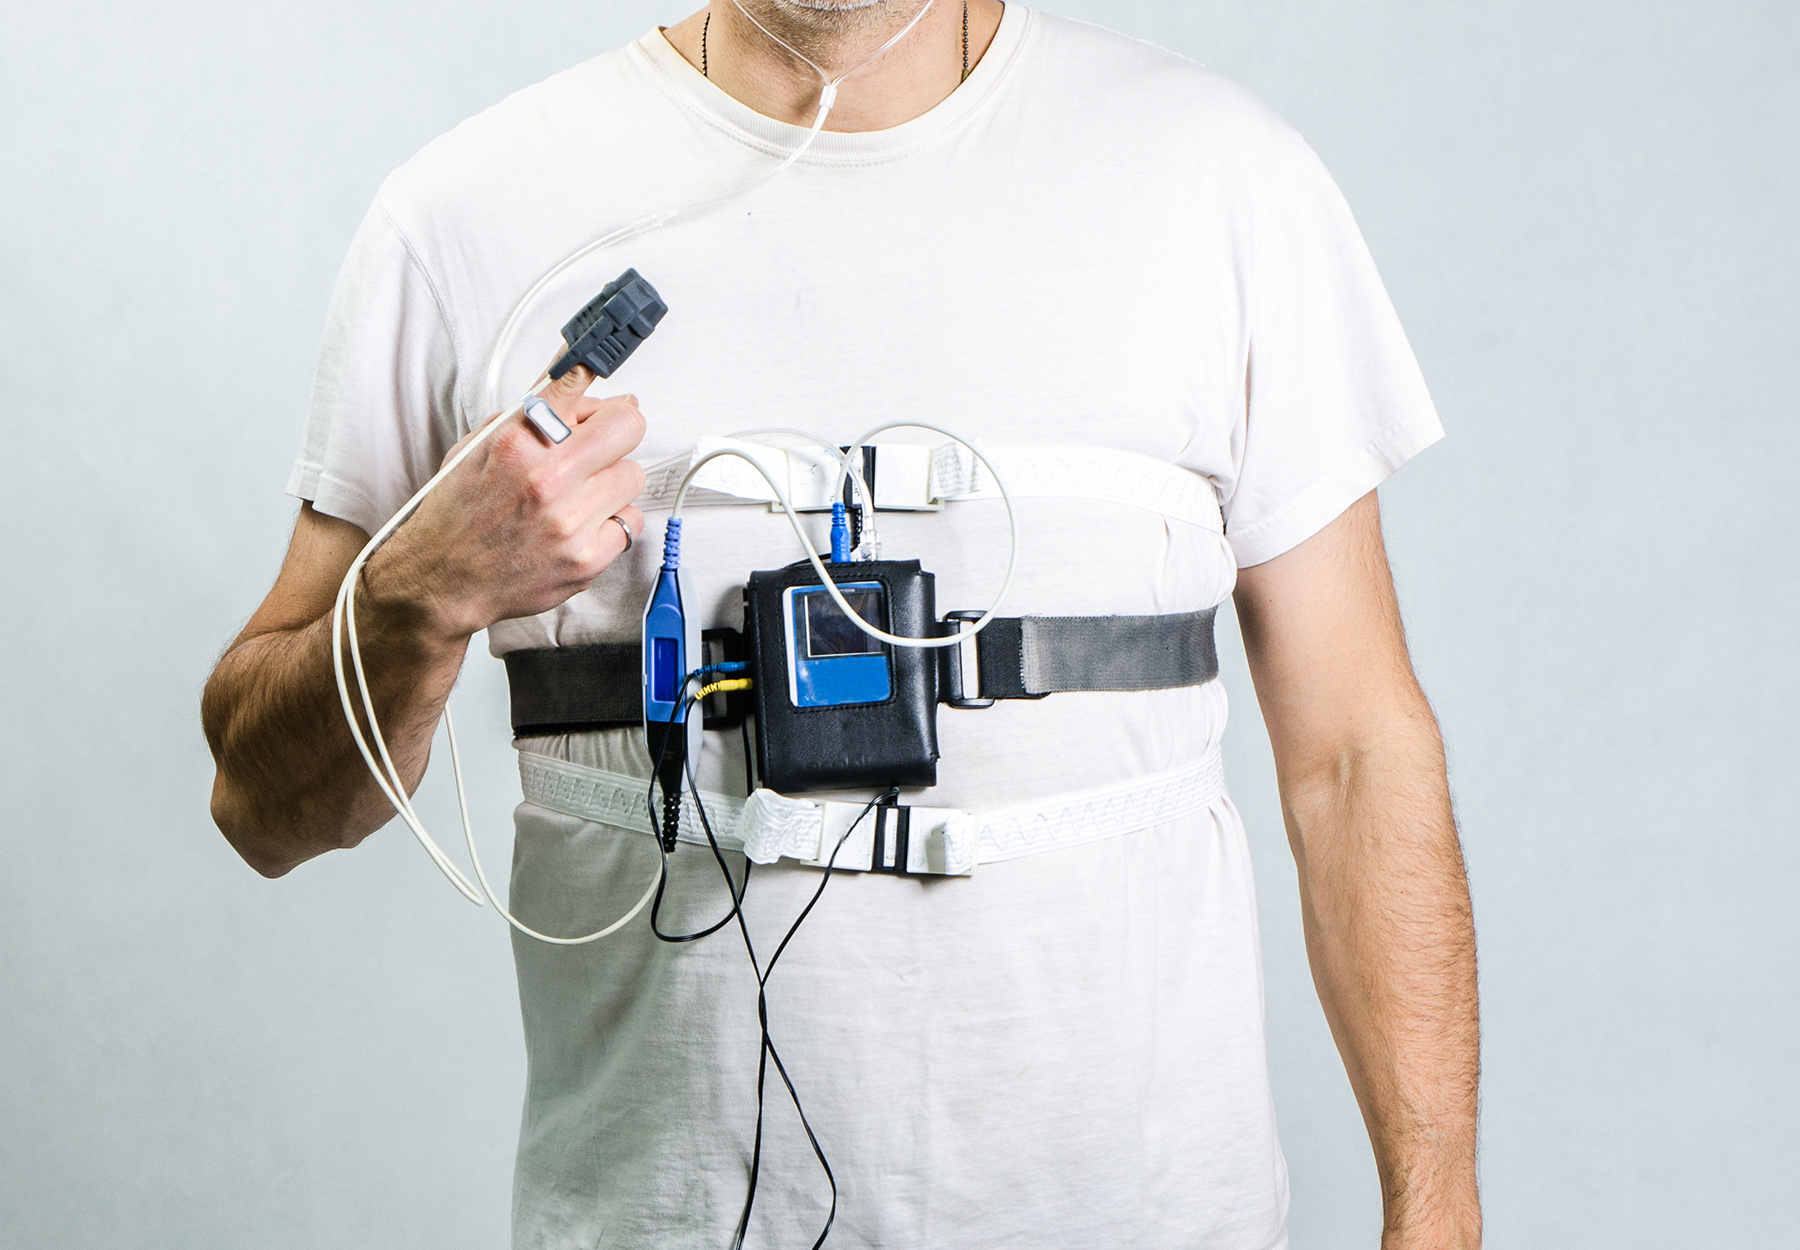 Closeup photo of man in white T-shirt who is also wearing sleep apnea monitoring equipment. Stock photo.